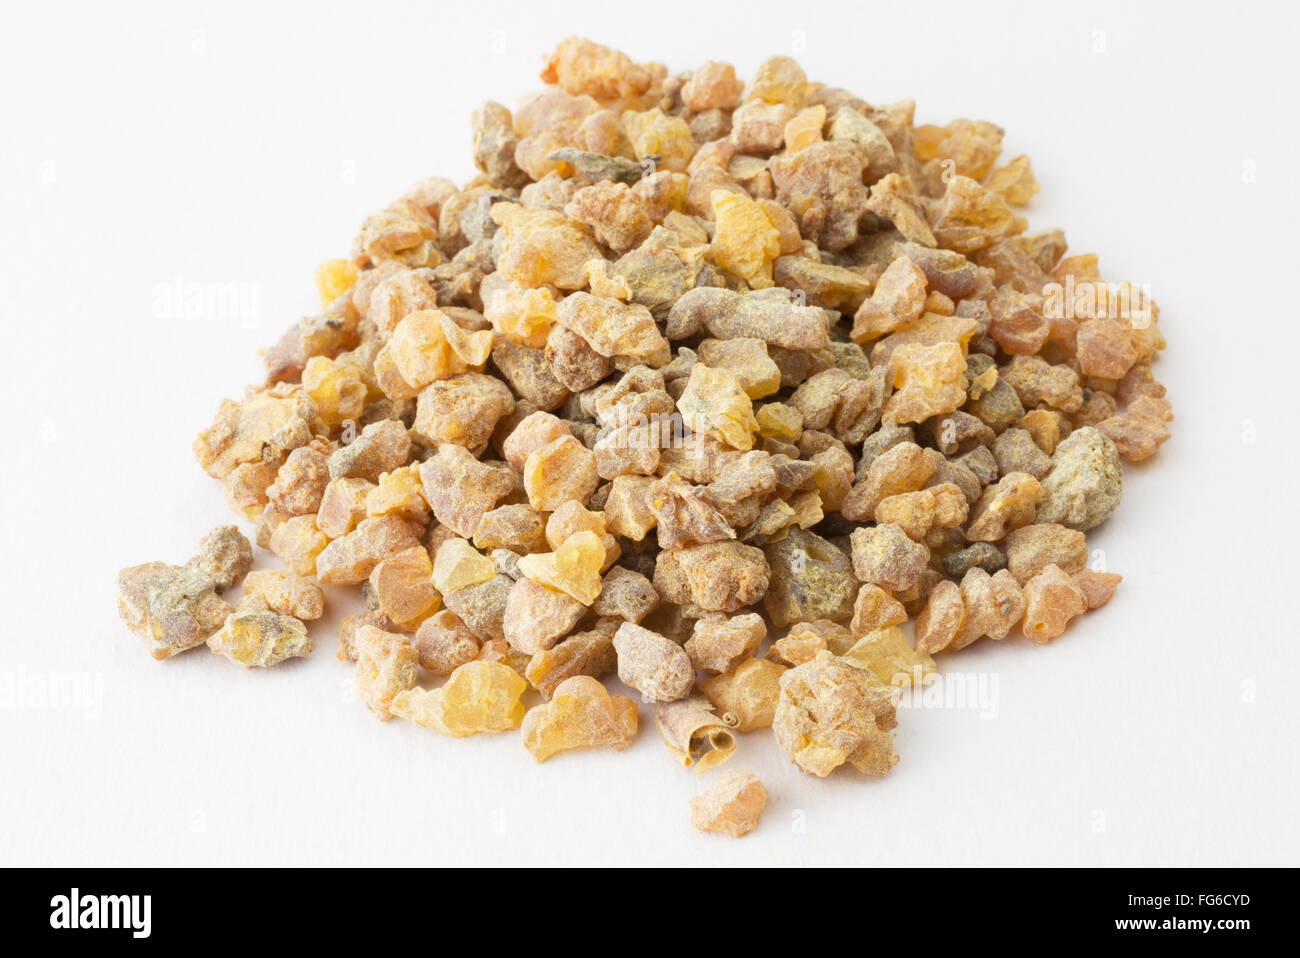 Pile of genuine Myrrh (Commiphora) resin in grains Stock Photo